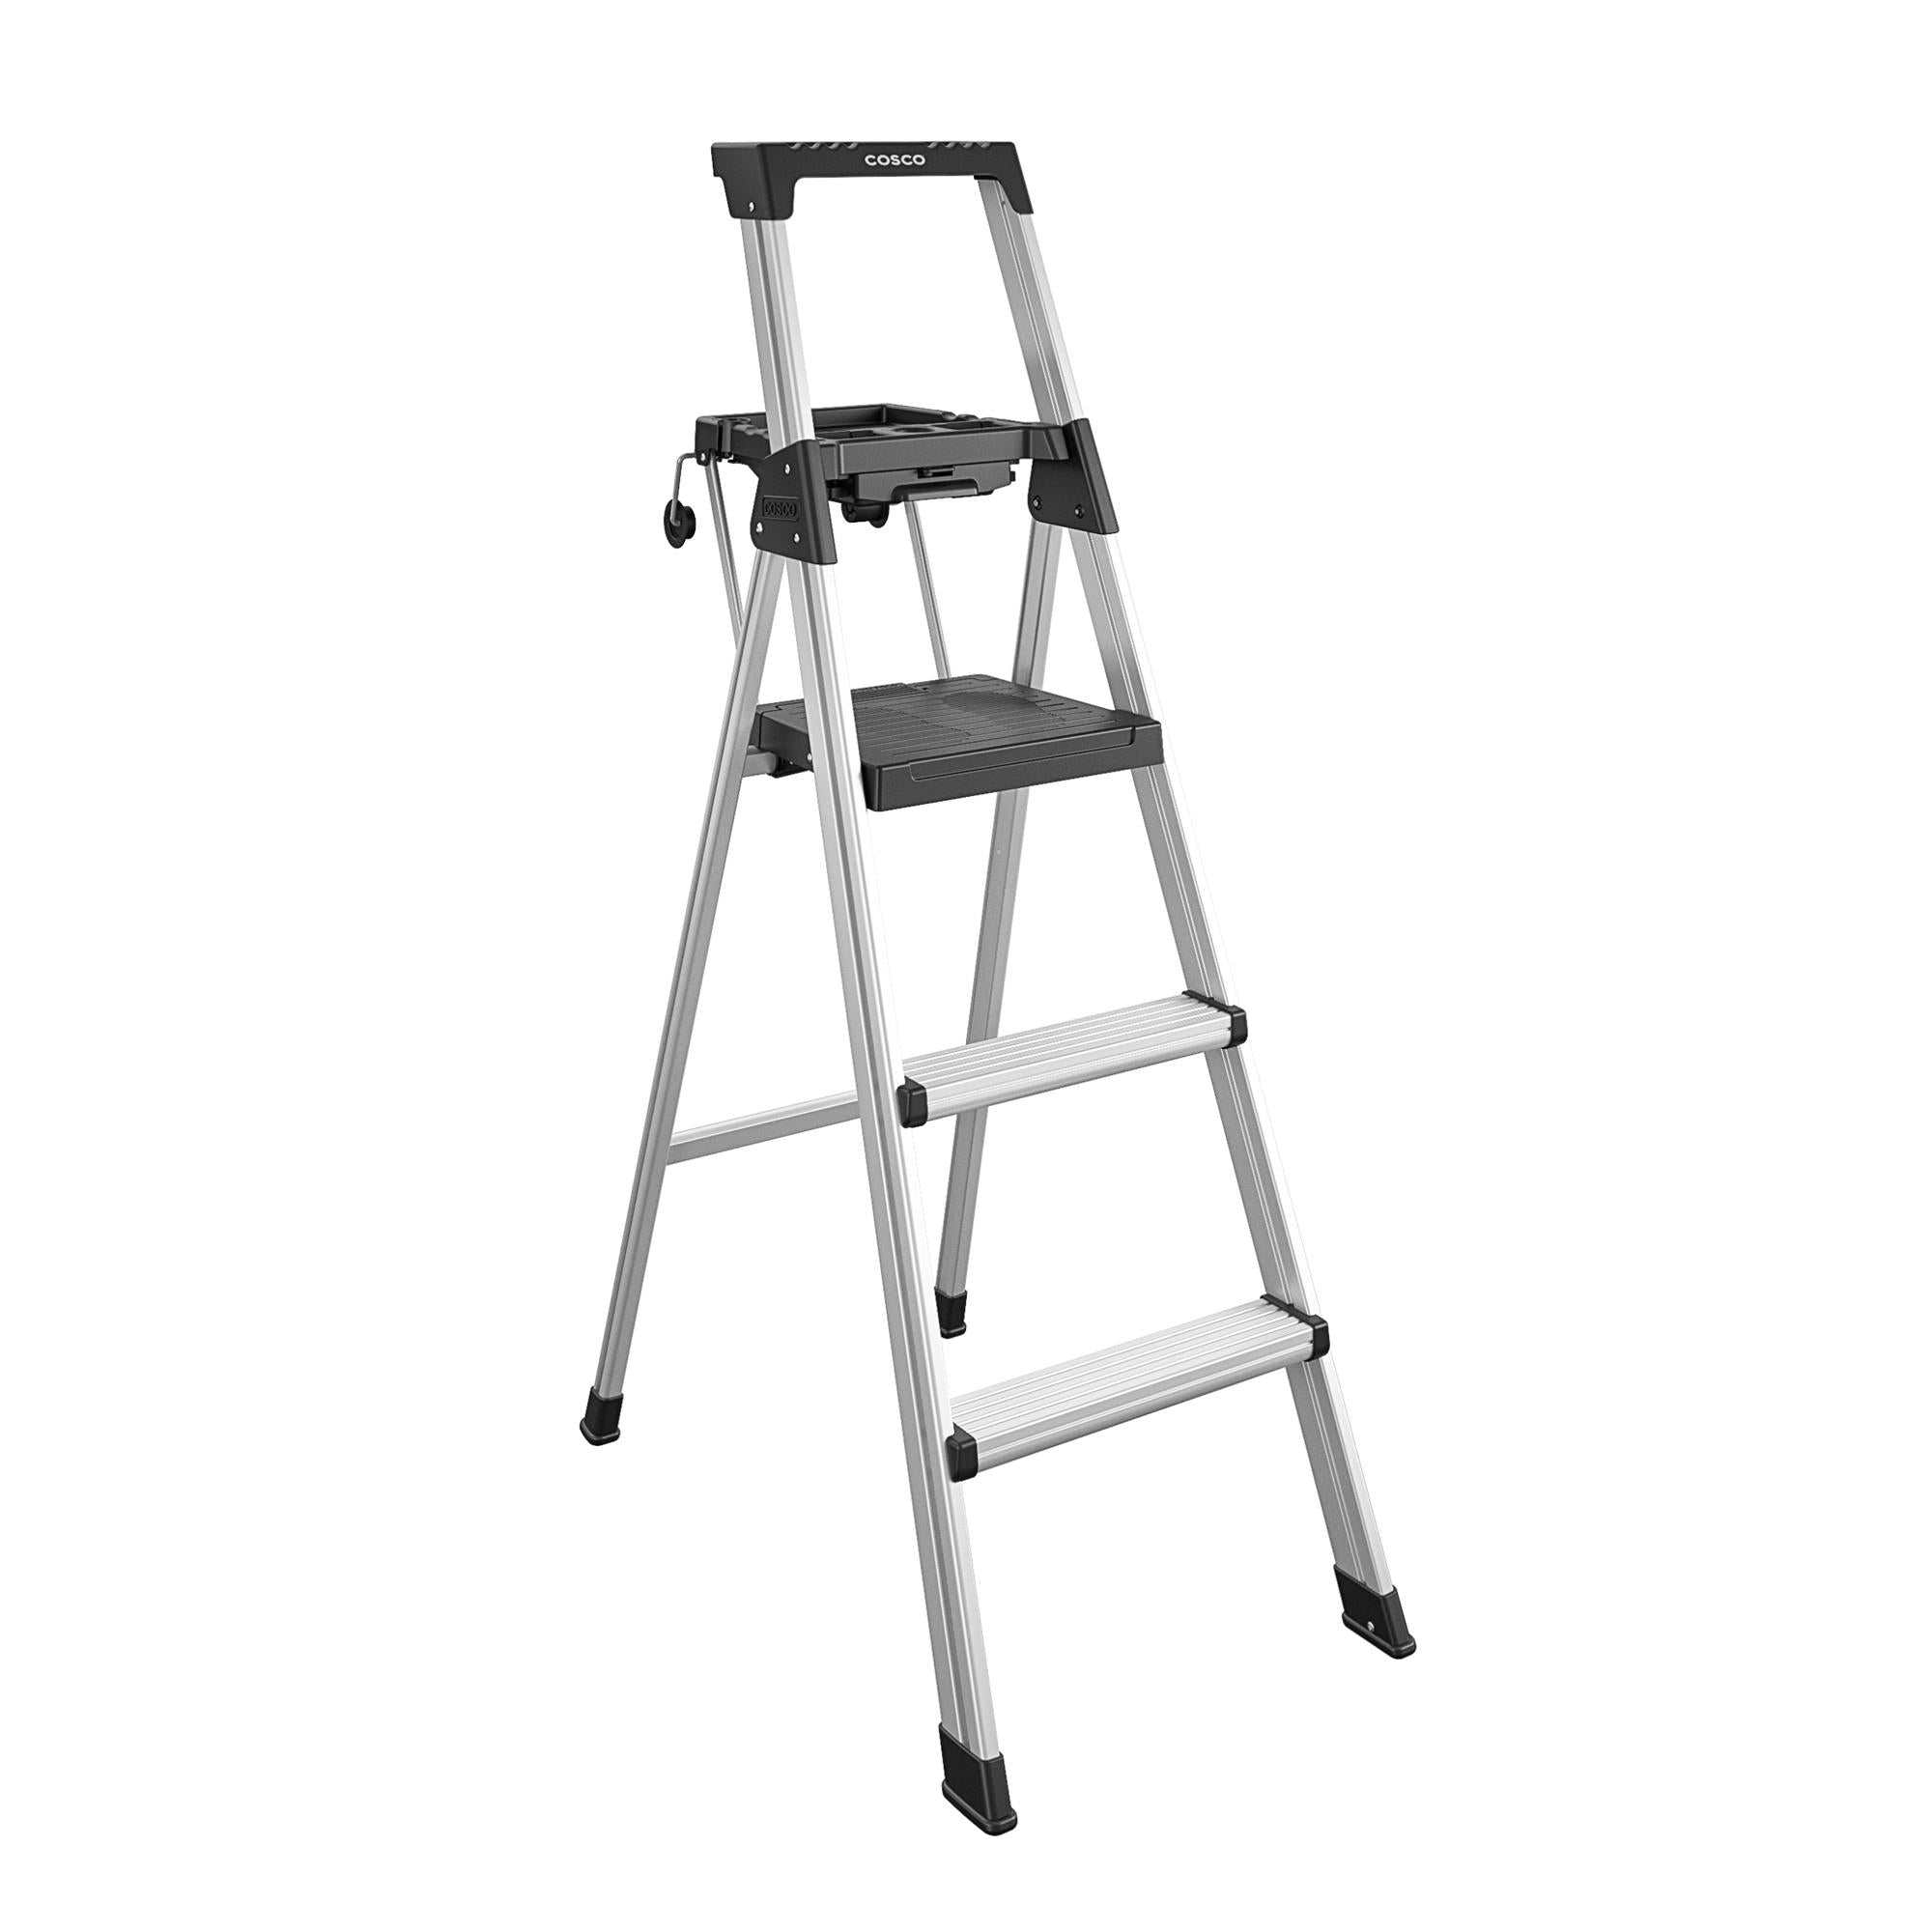 5' Premium Step Ladder - Black / Silver - 1-Pack